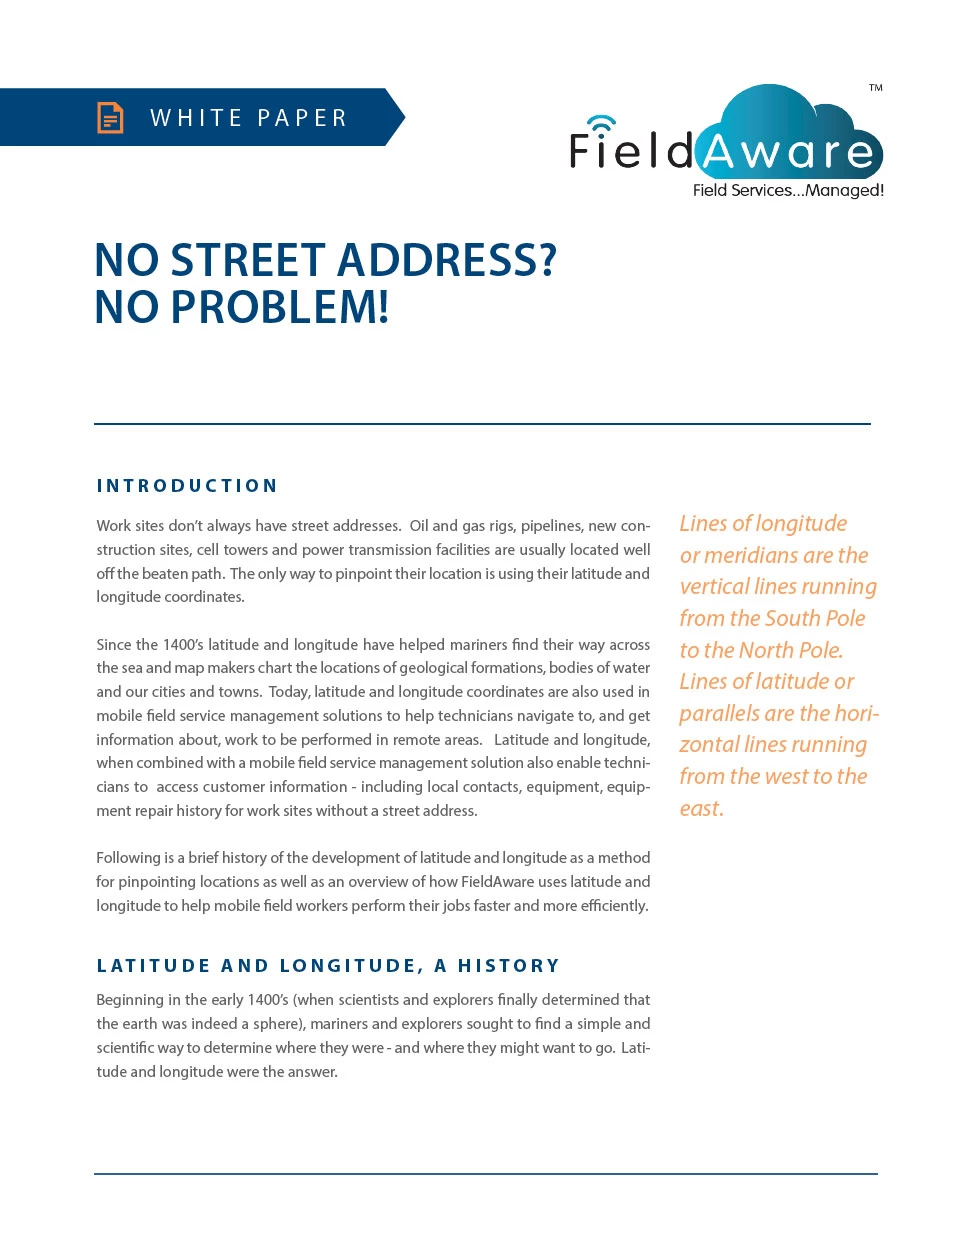 No Street Address? No Problem! White Paper